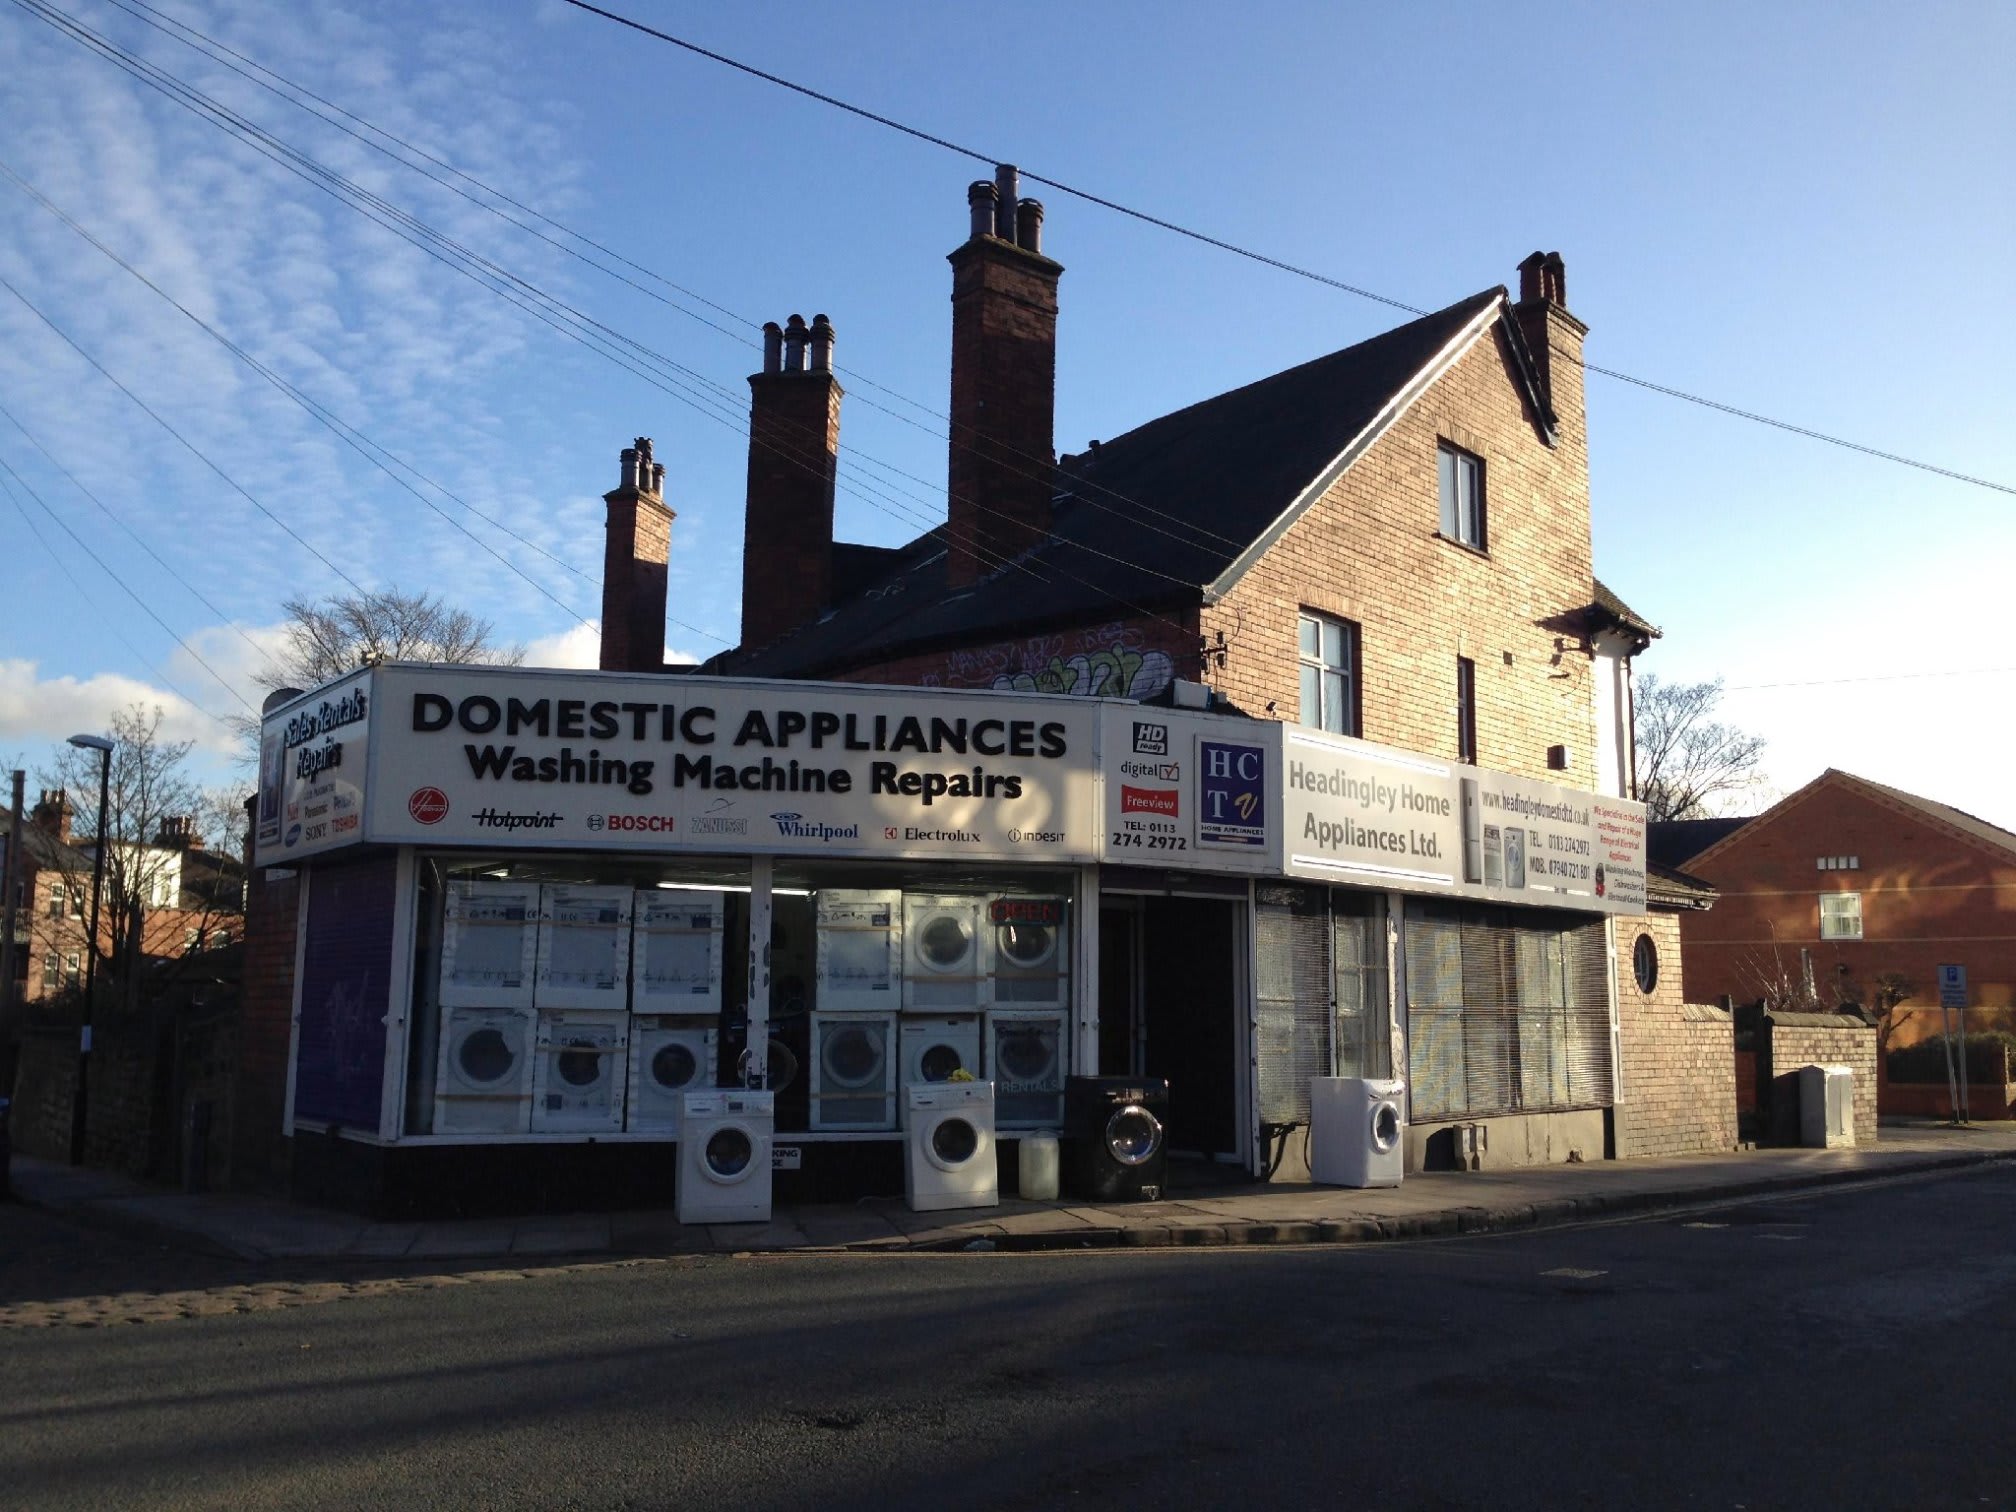 Headingley Home Appliances Ltd Leeds 01132 742972